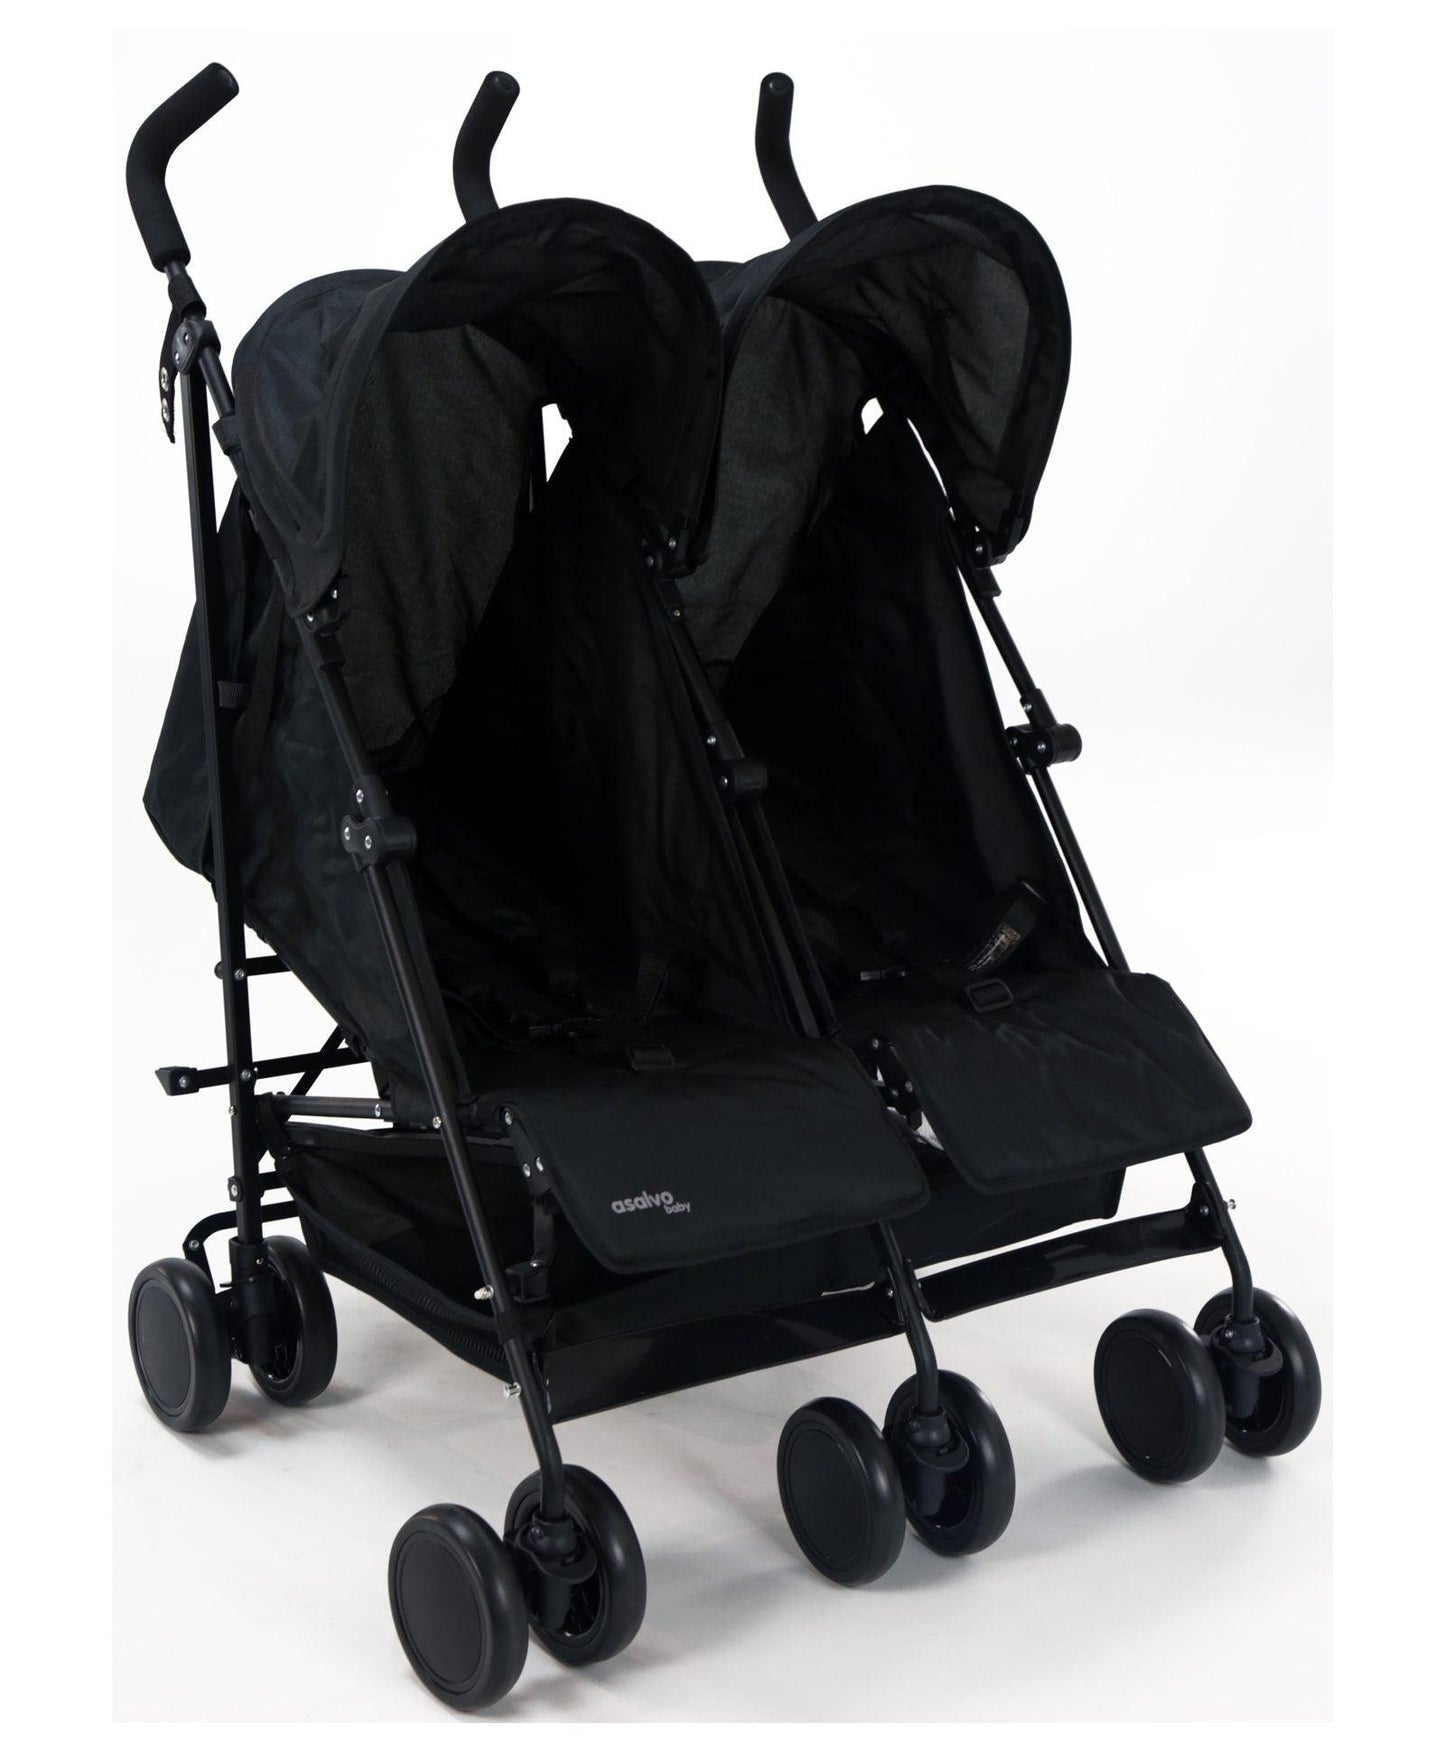 PATOYS | Asalvo Spain 14221 Double Stroller - Black Baby Stroller Asalvo